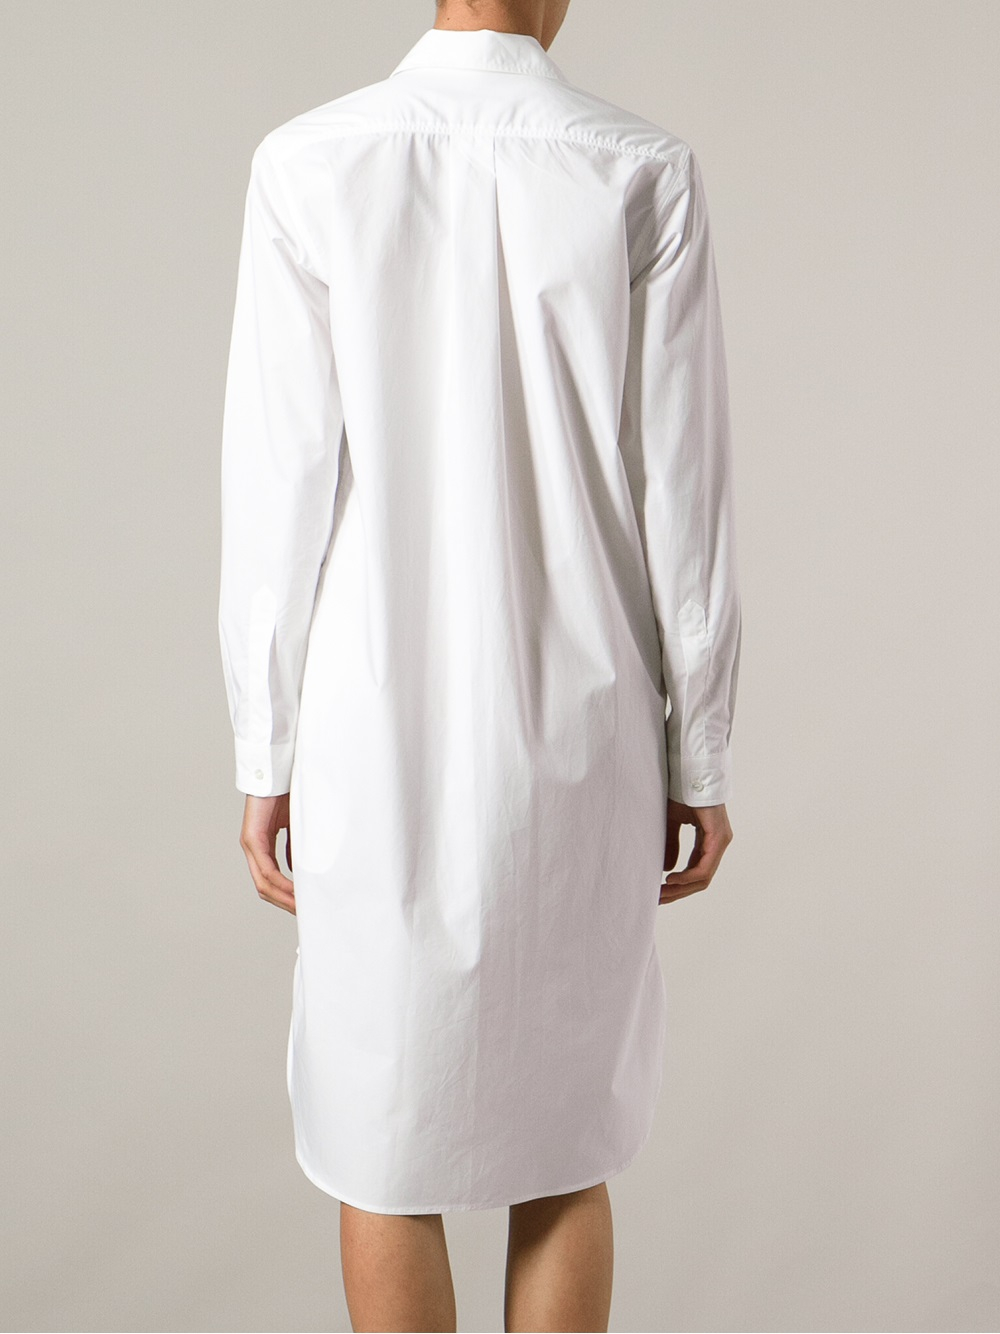 Lyst - Sofie D'Hoore Downy Shirt Dress in White